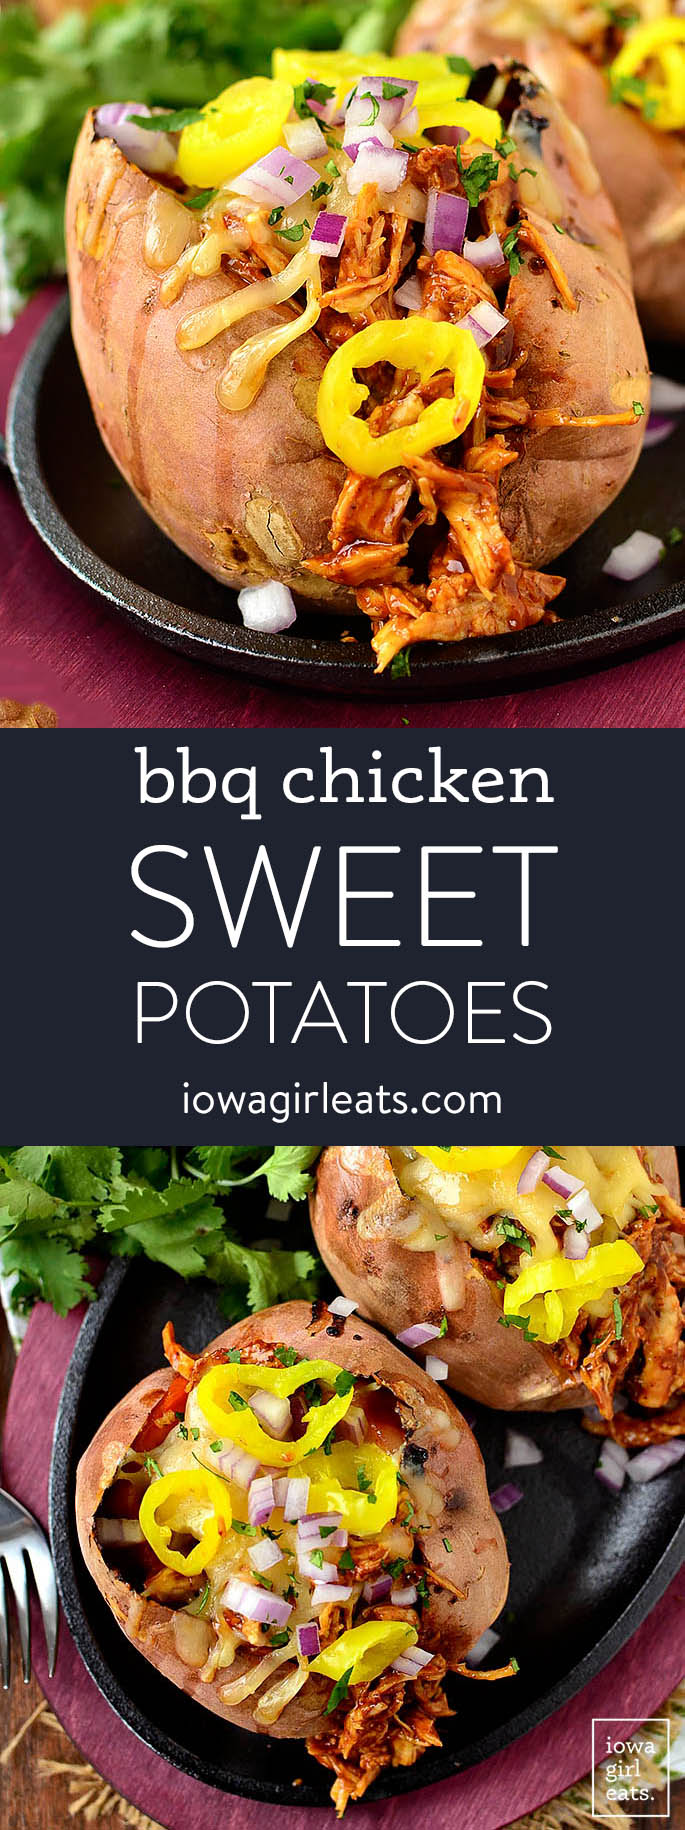 photo collage of bbq chicken stuffed sweet potatoes